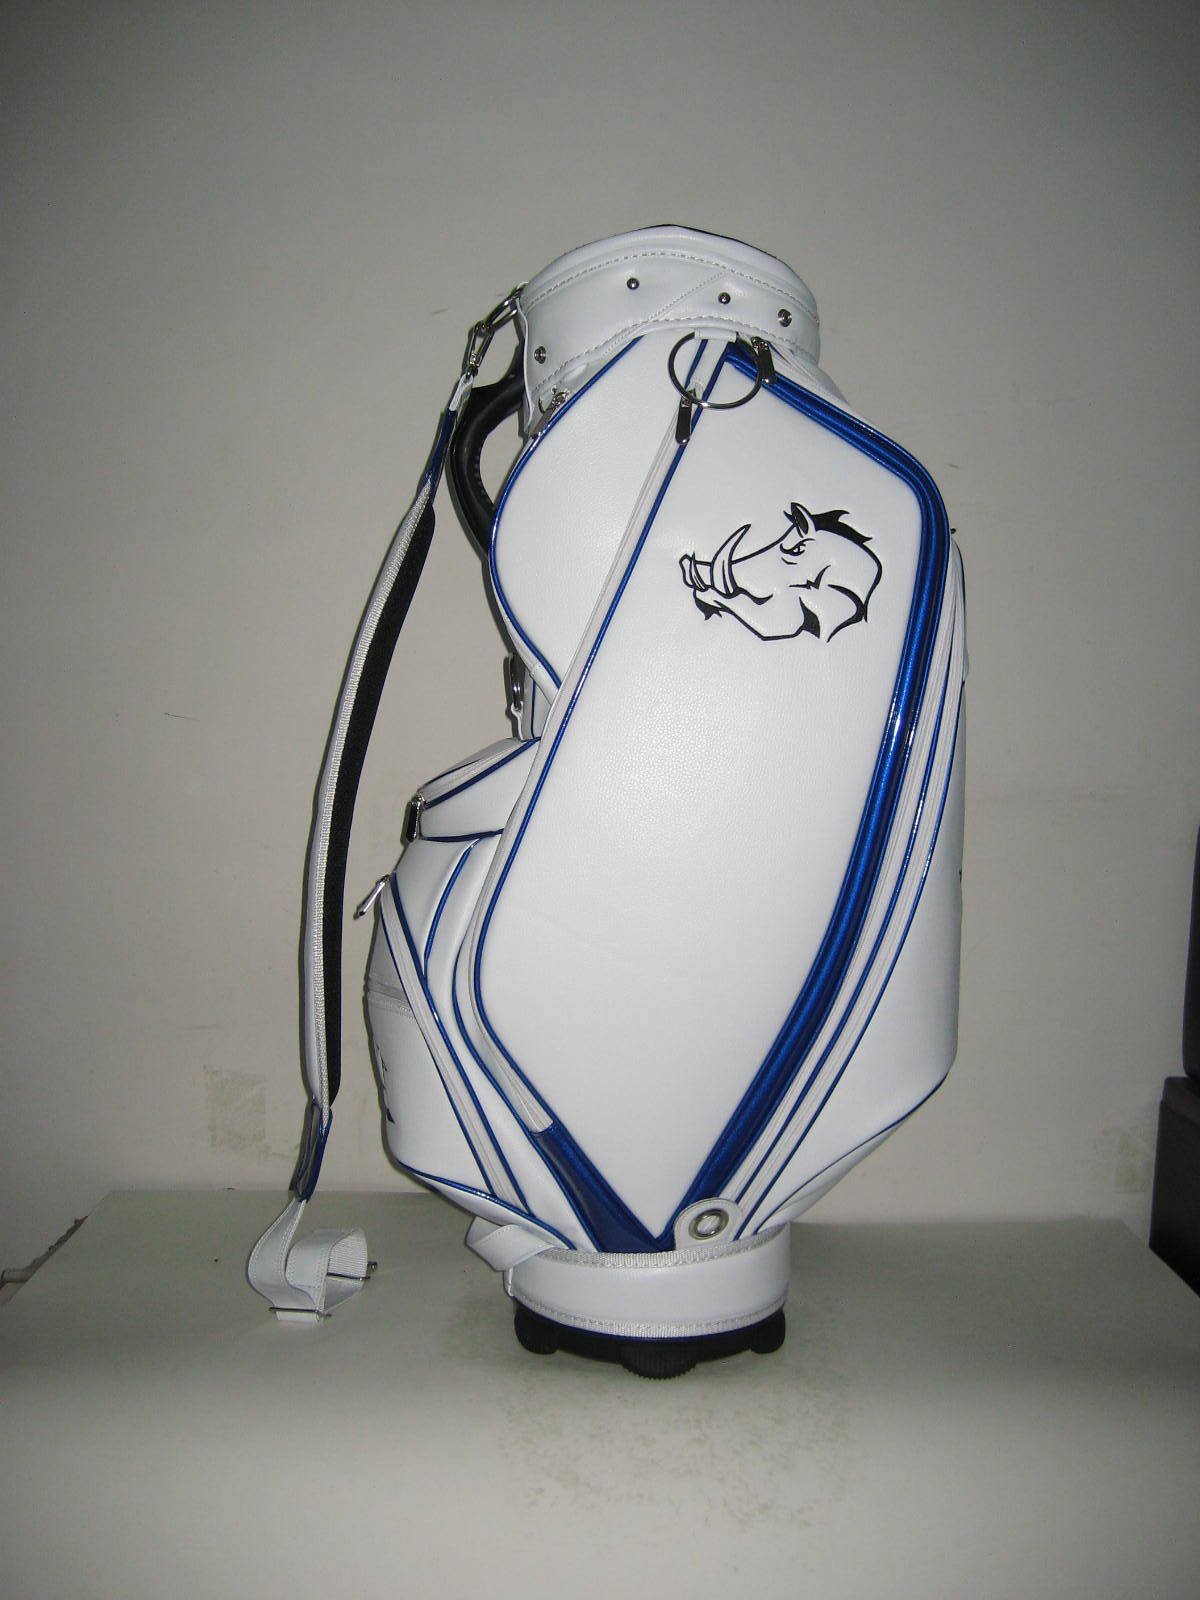 Customised football club golf bags by Golf Custom Bags 121